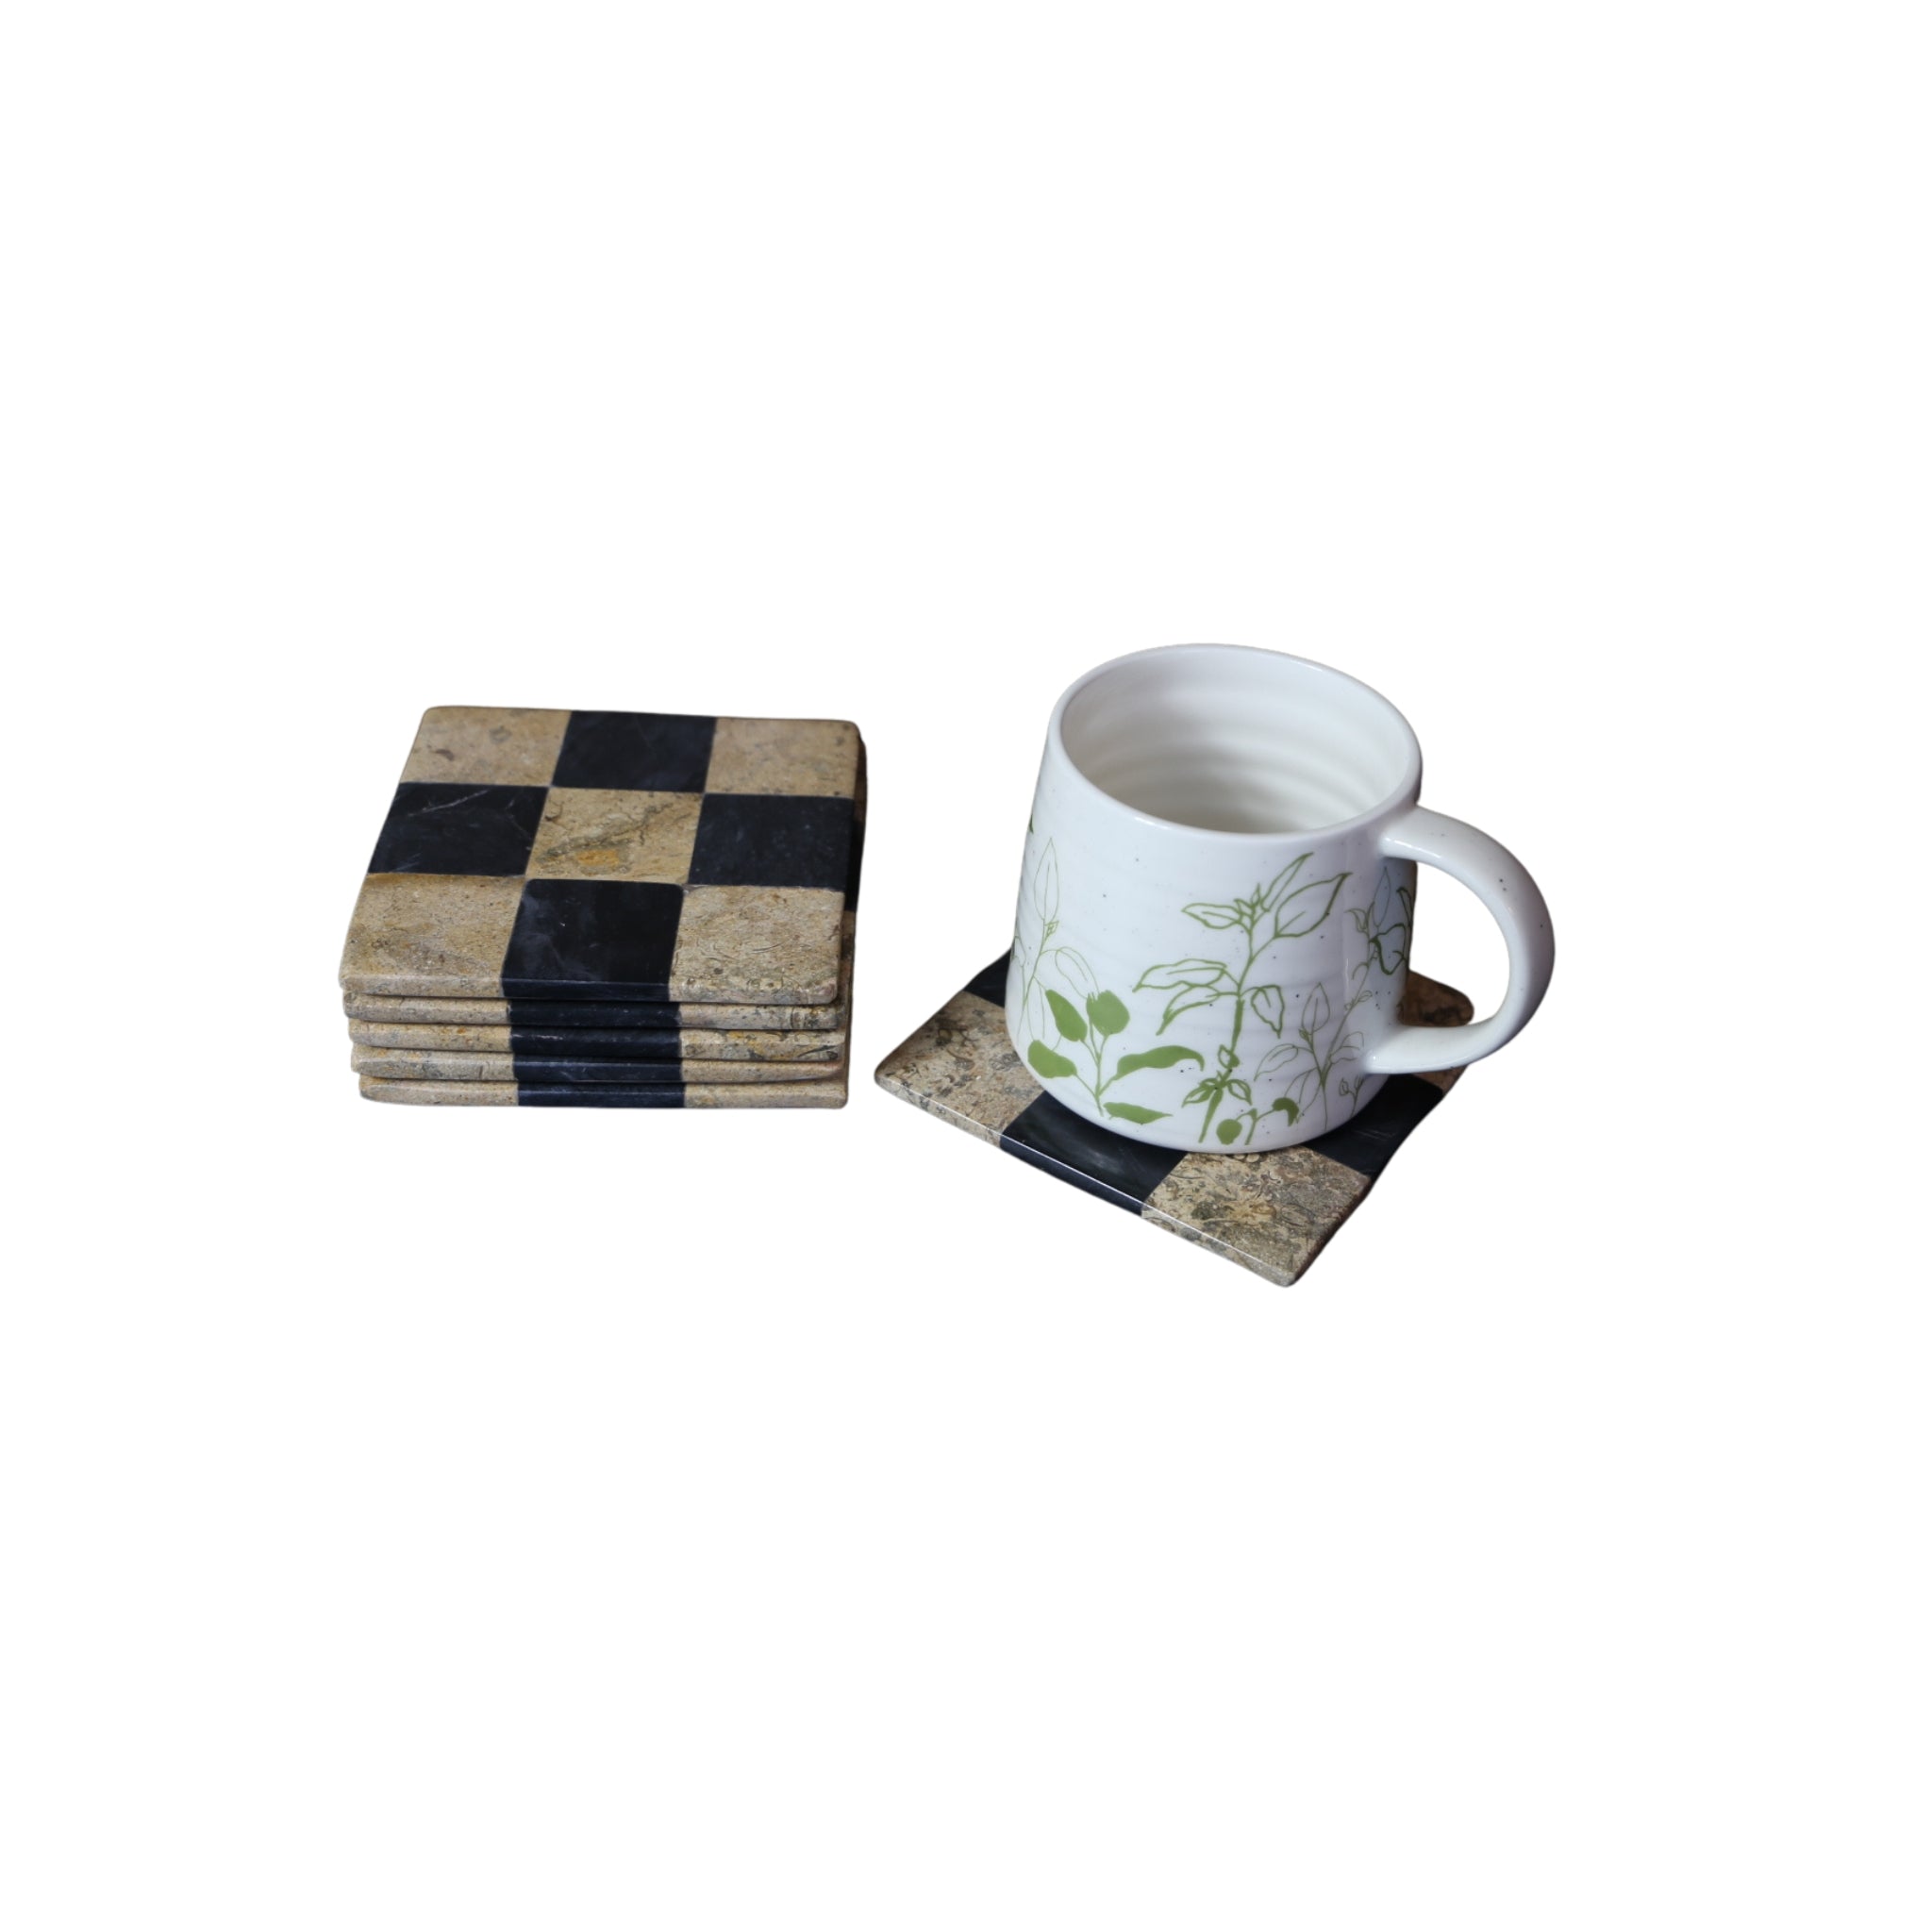 Onyx Marble Tea Coasters - Square Check (Set of 6)